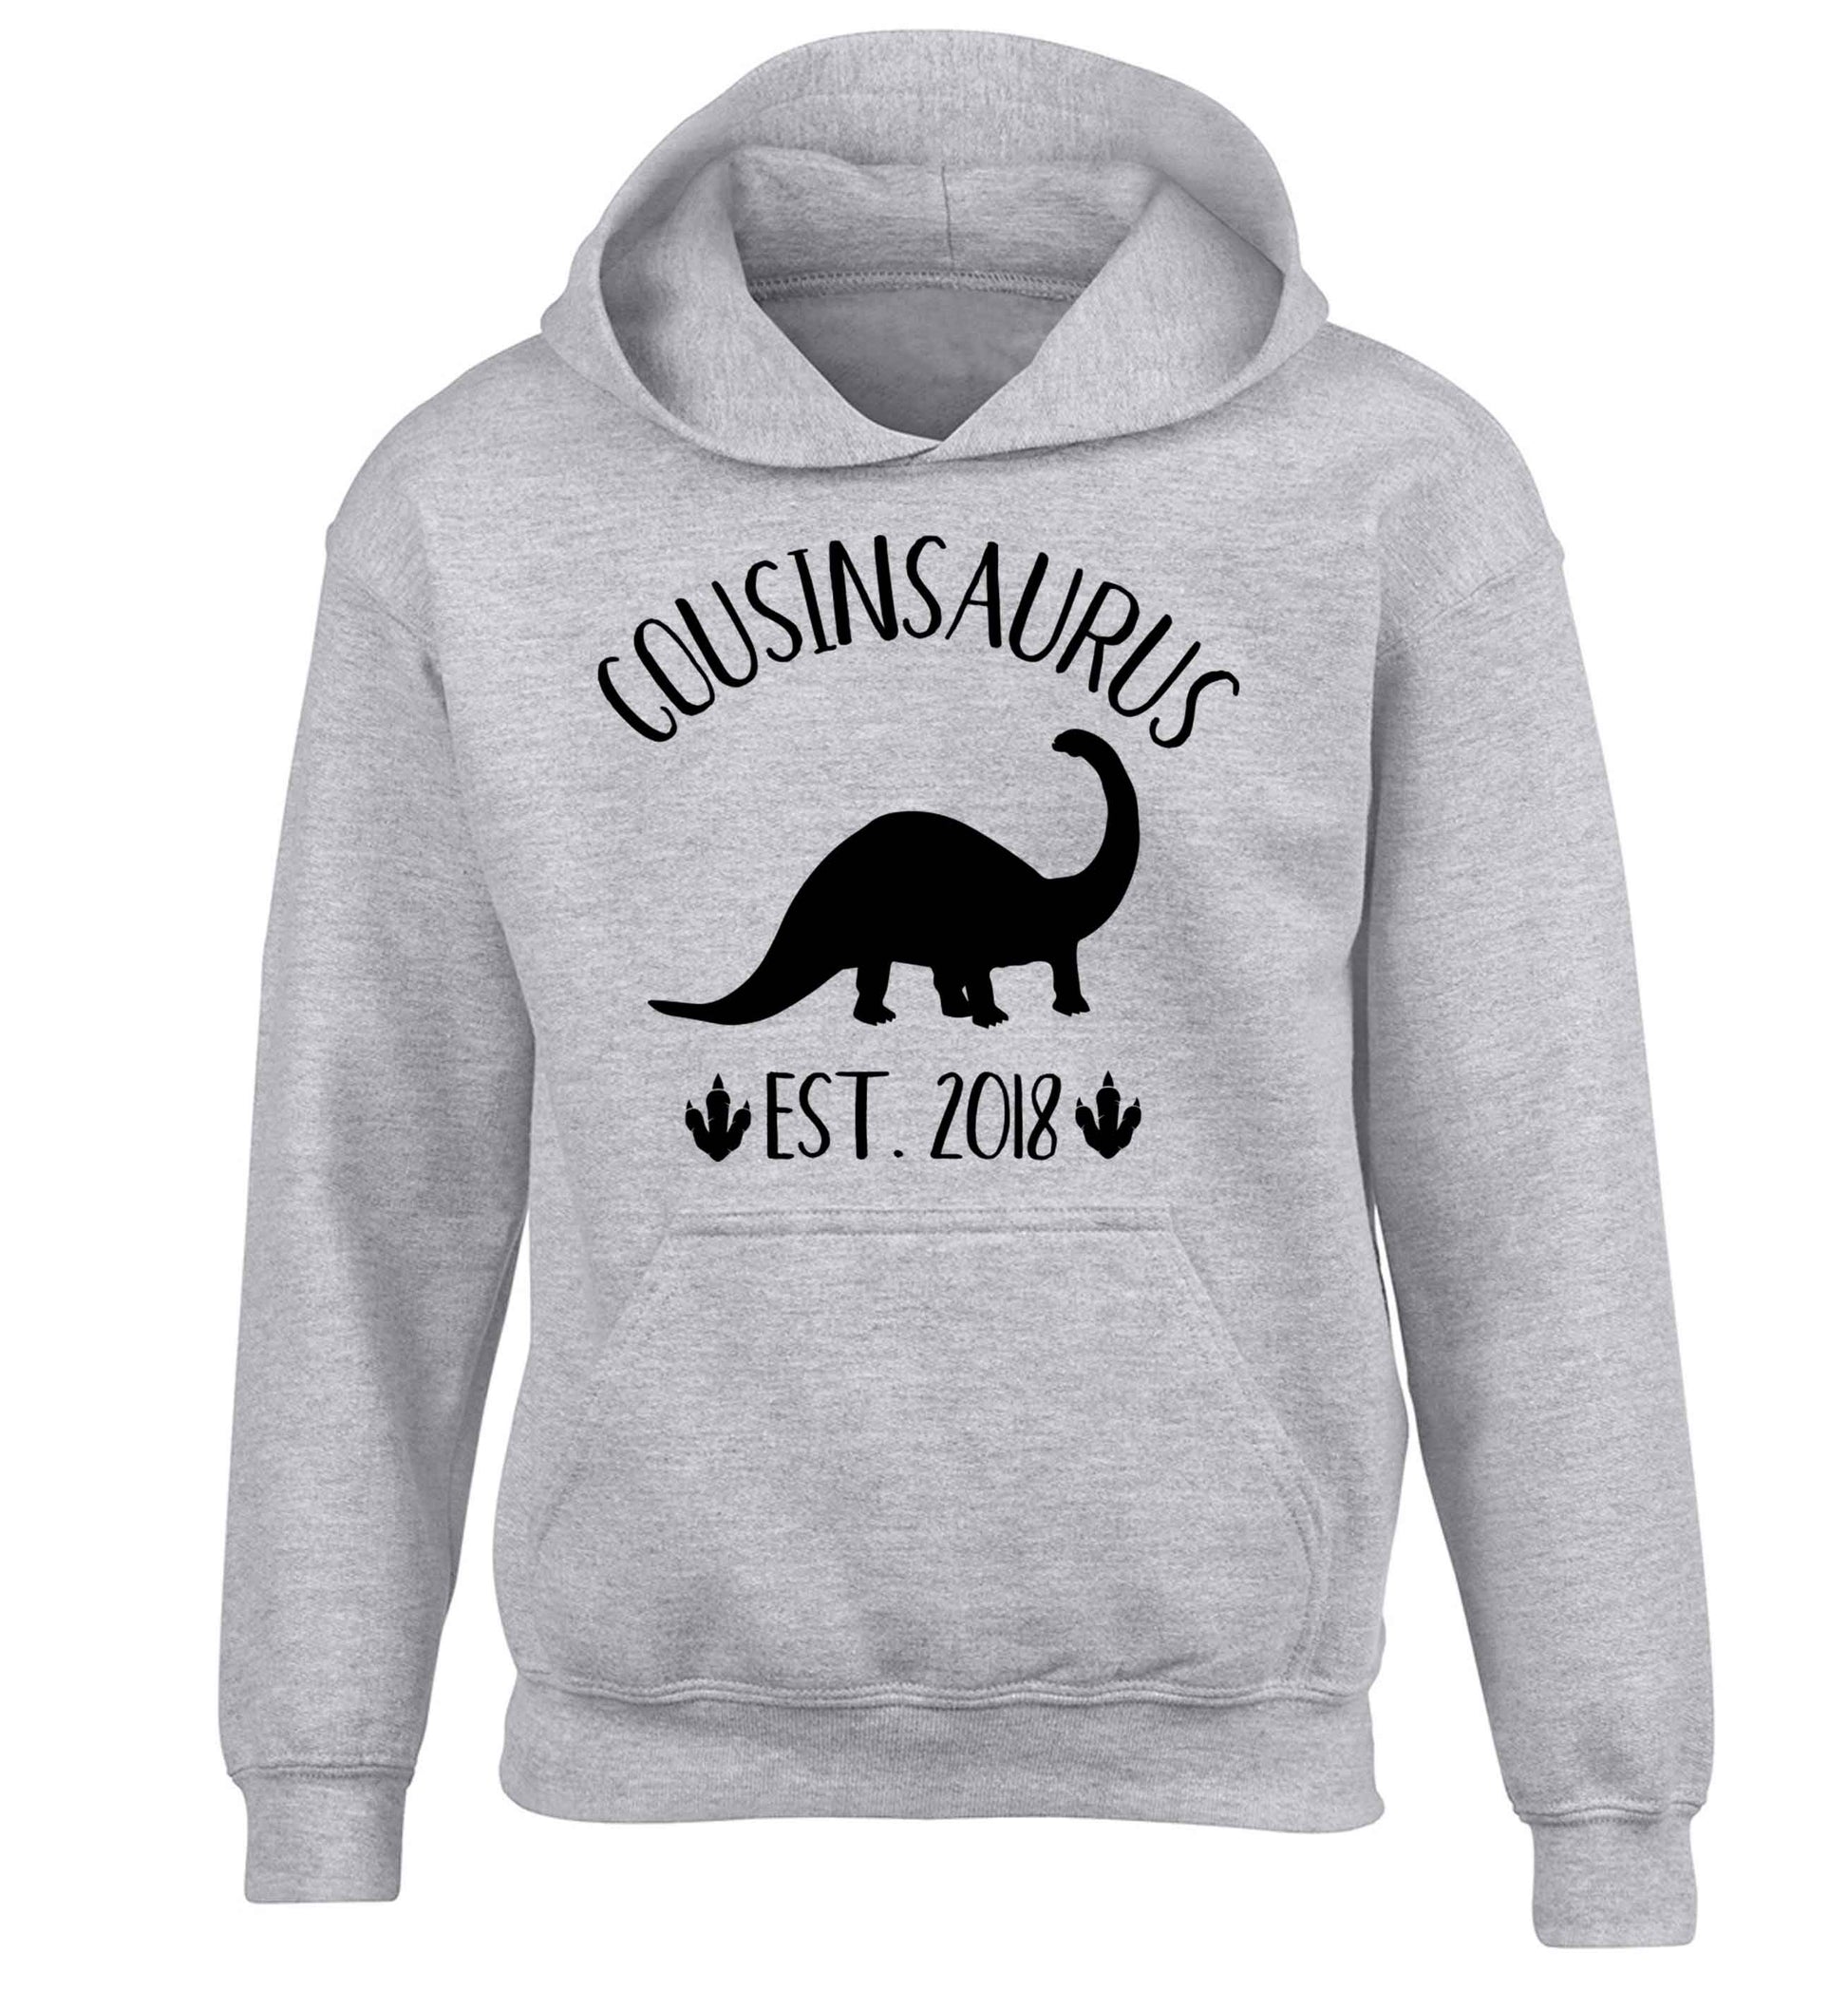 Personalised cousinsaurus since (custom date) children's grey hoodie 12-13 Years